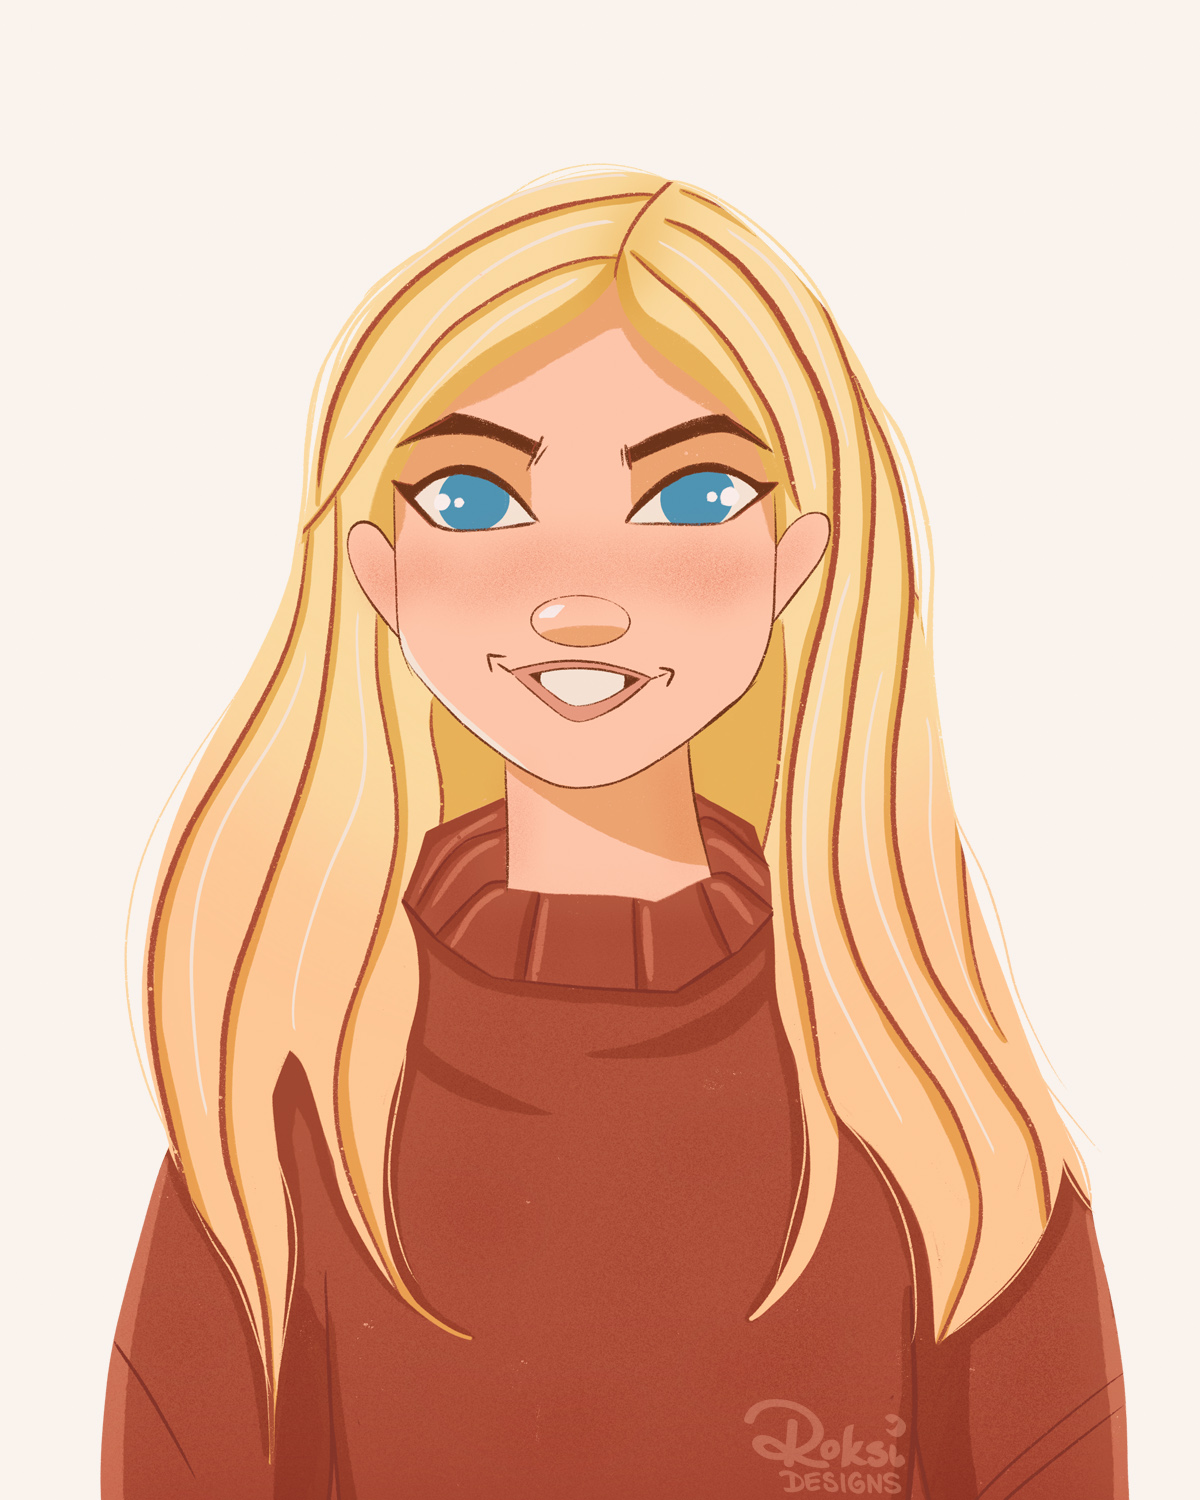 sweater girl, character art, illustration, portrait